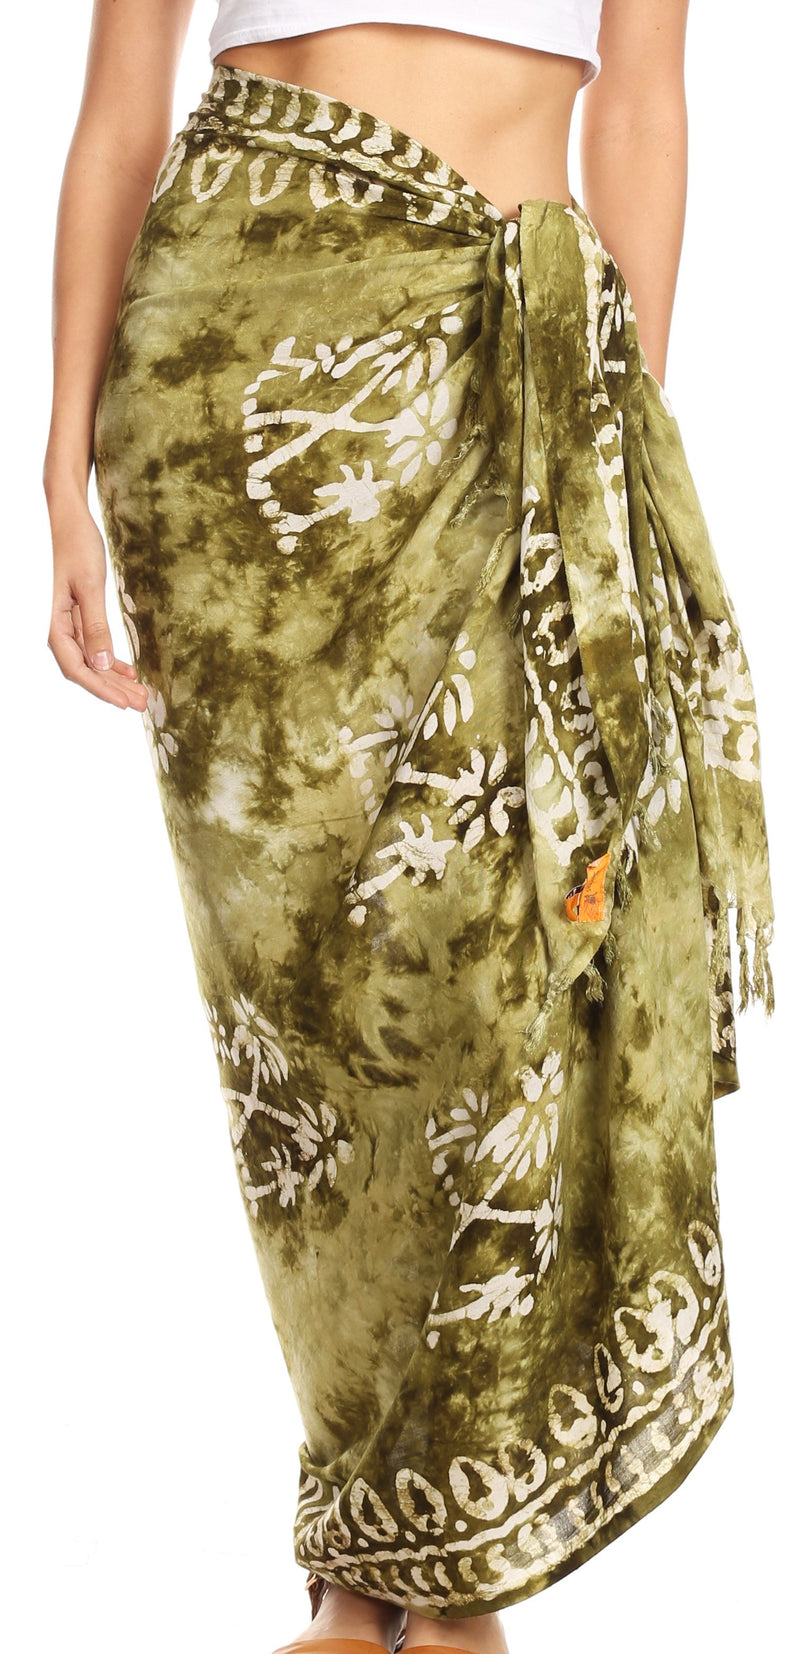 Sakkas Lygia Women's Summer Floral Print Sarong Swimsuit Cover up Beach Wrap Skirt